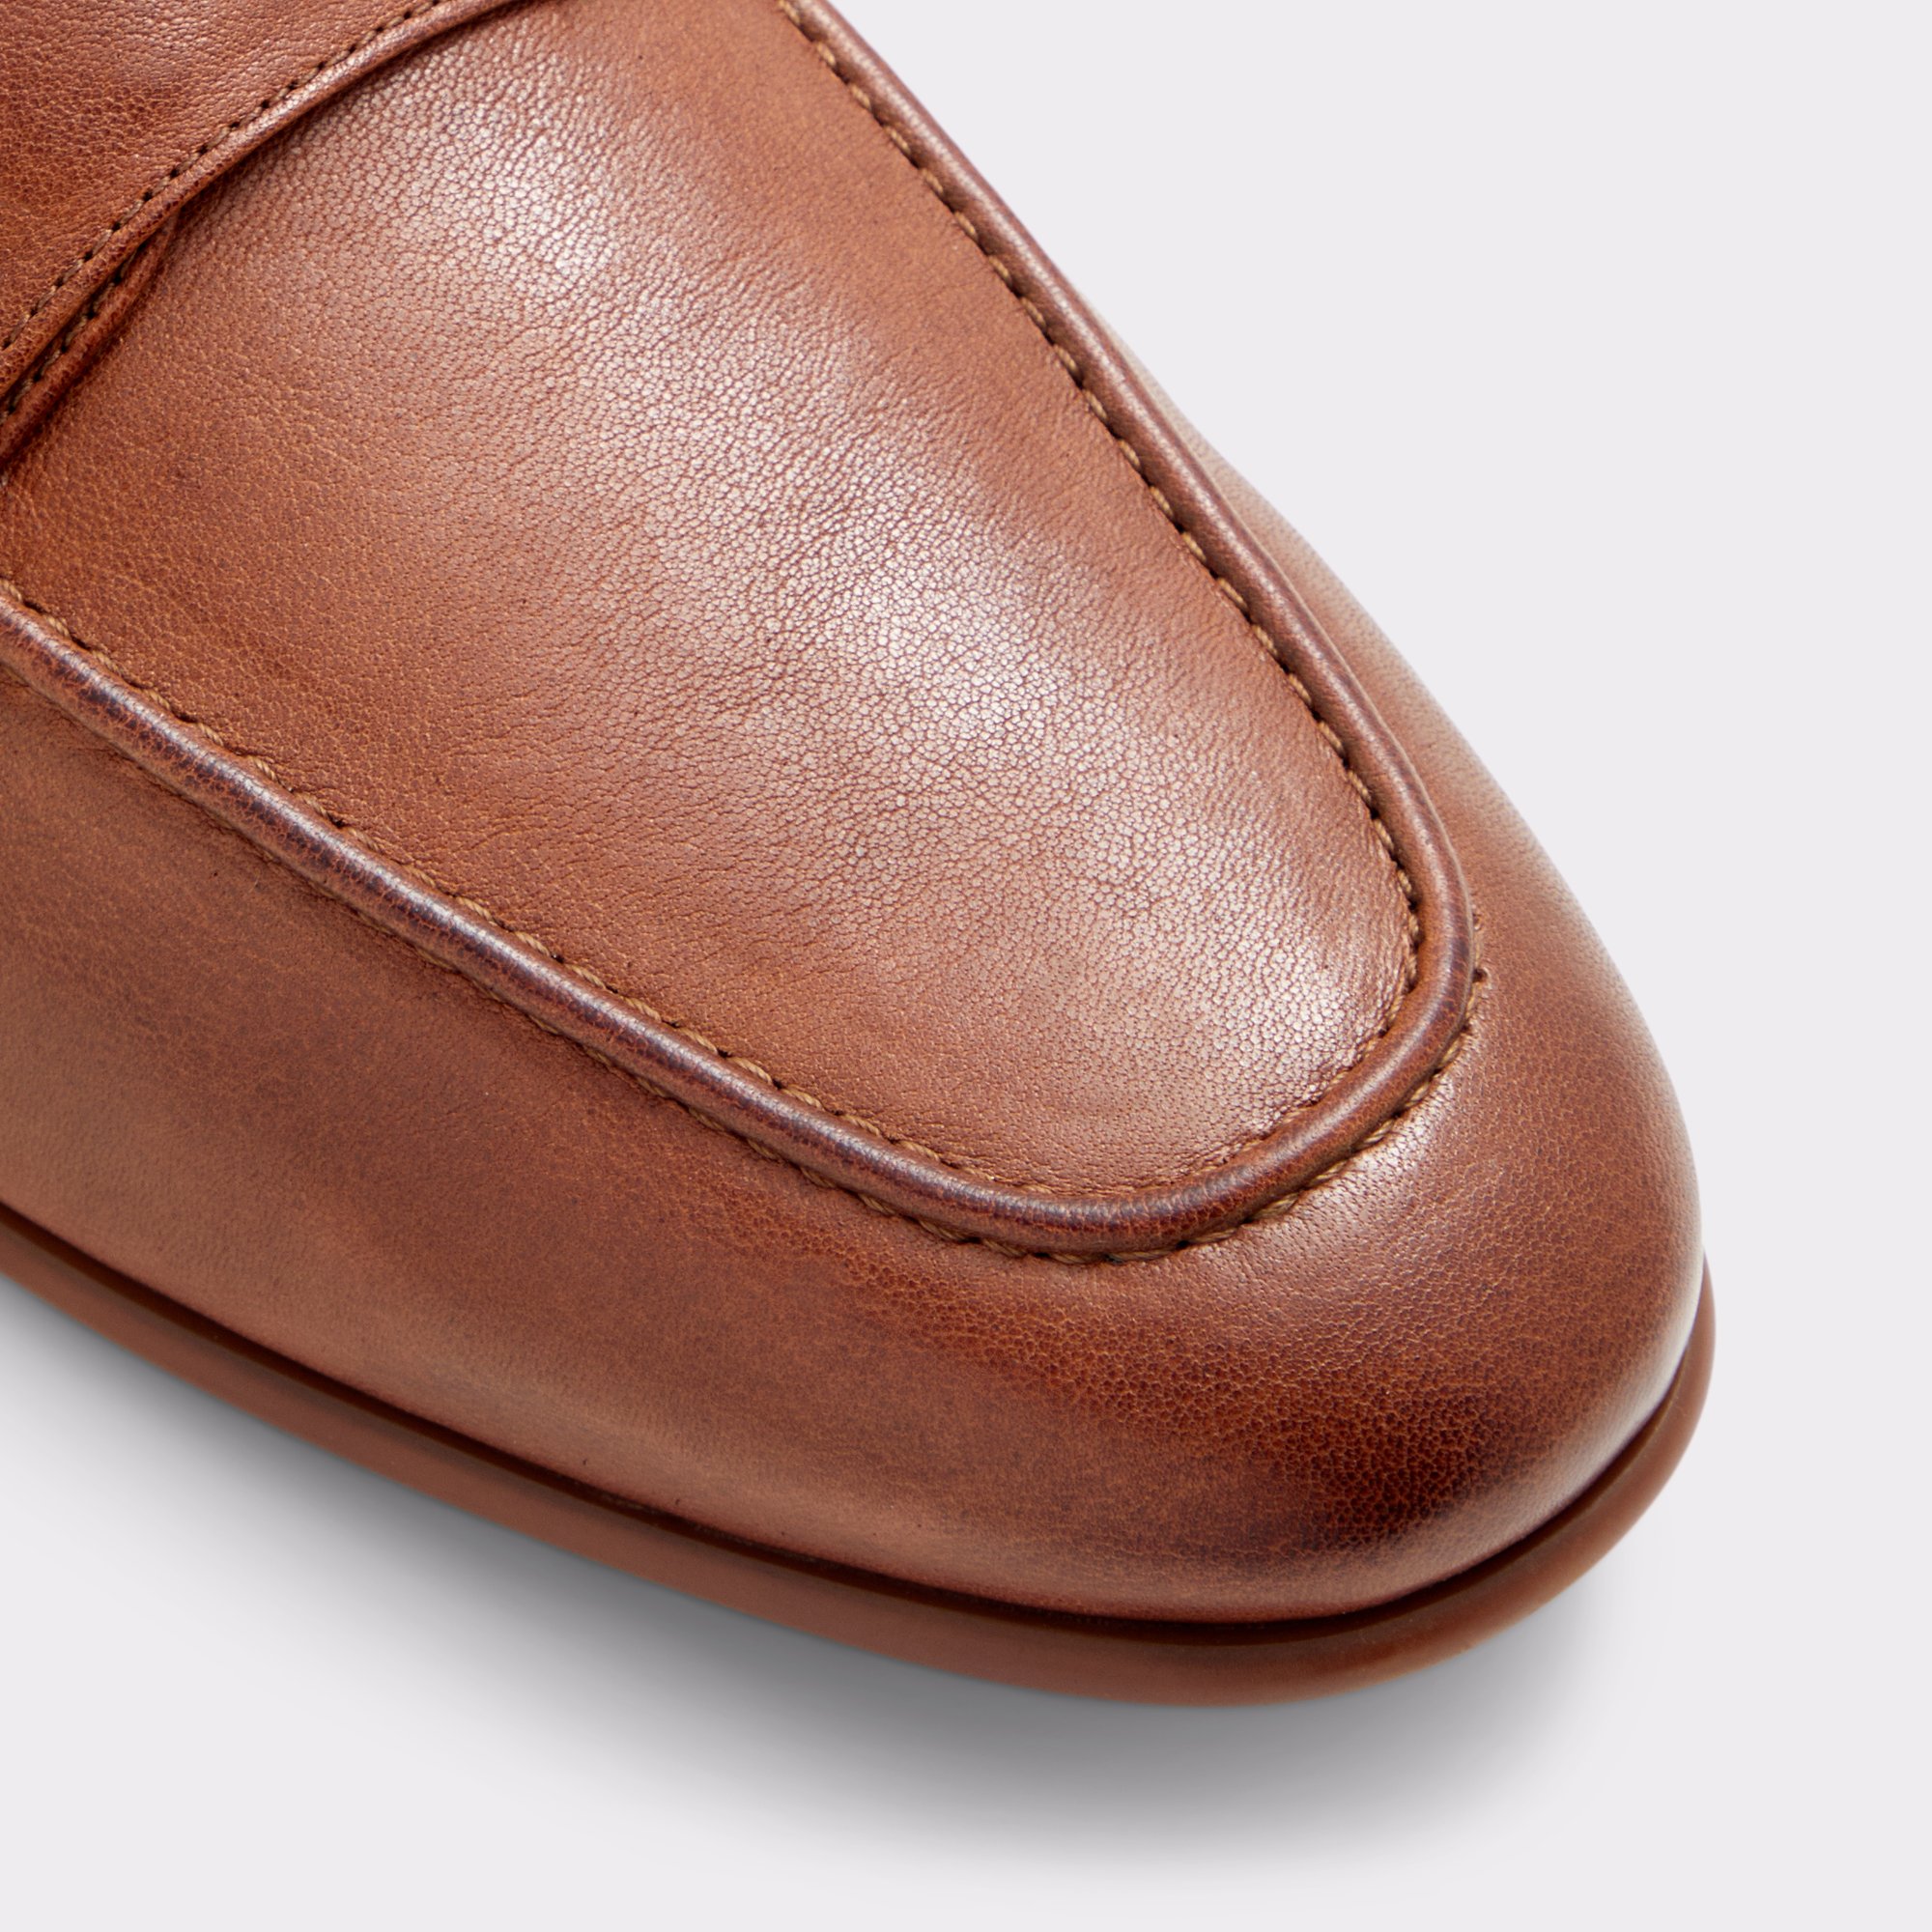 Cavafi Cognac Men's Loafers & Slip-Ons | ALDO Canada